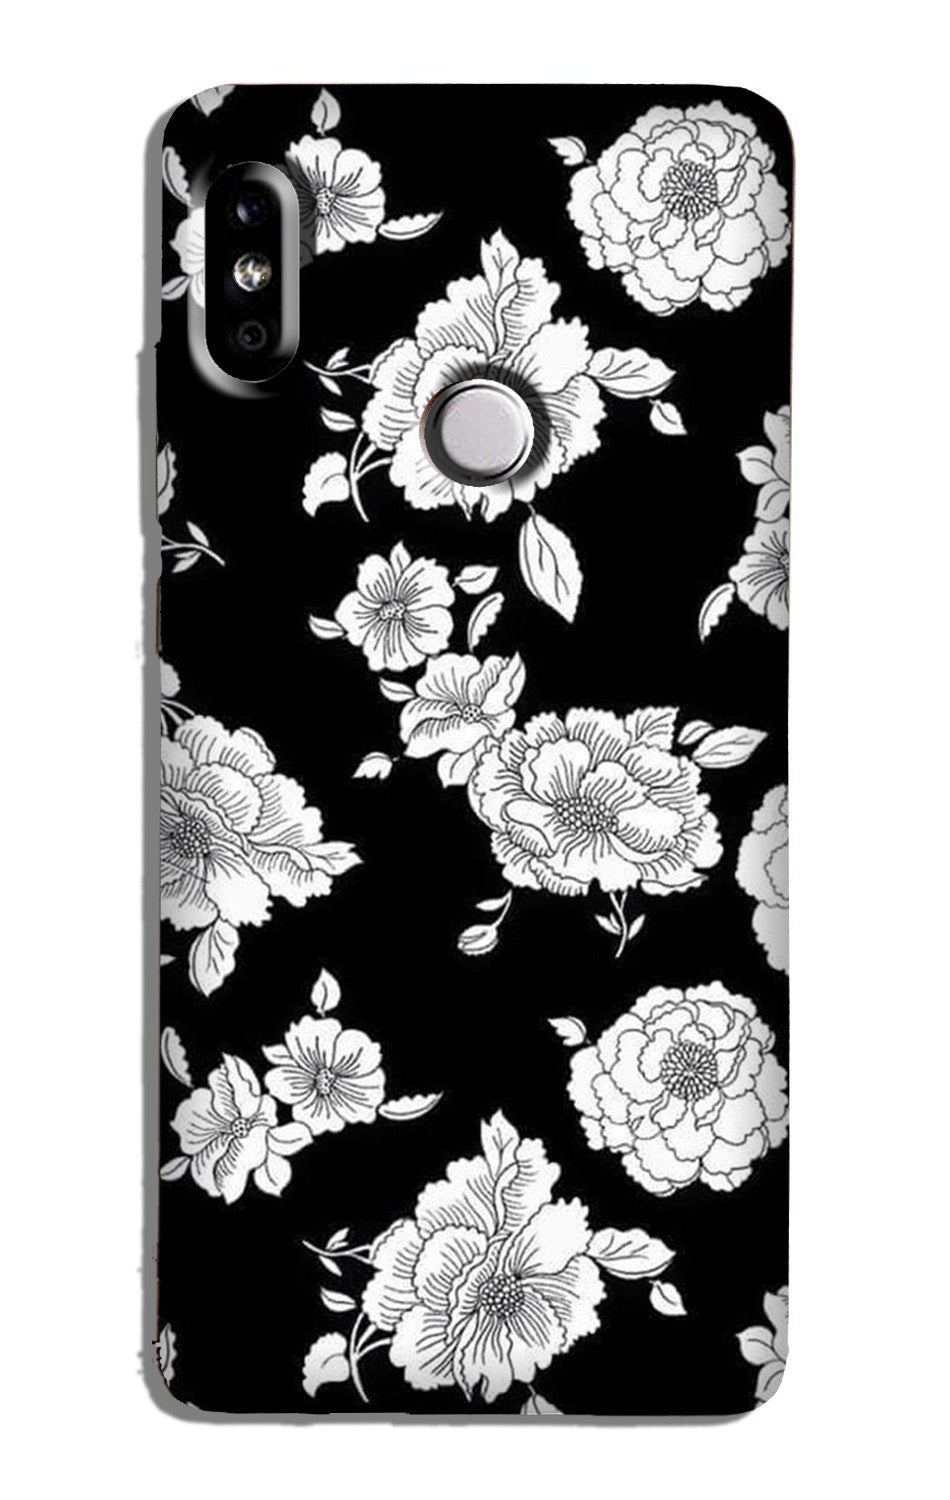 White flowers Black Background Case for Redmi 6 Pro